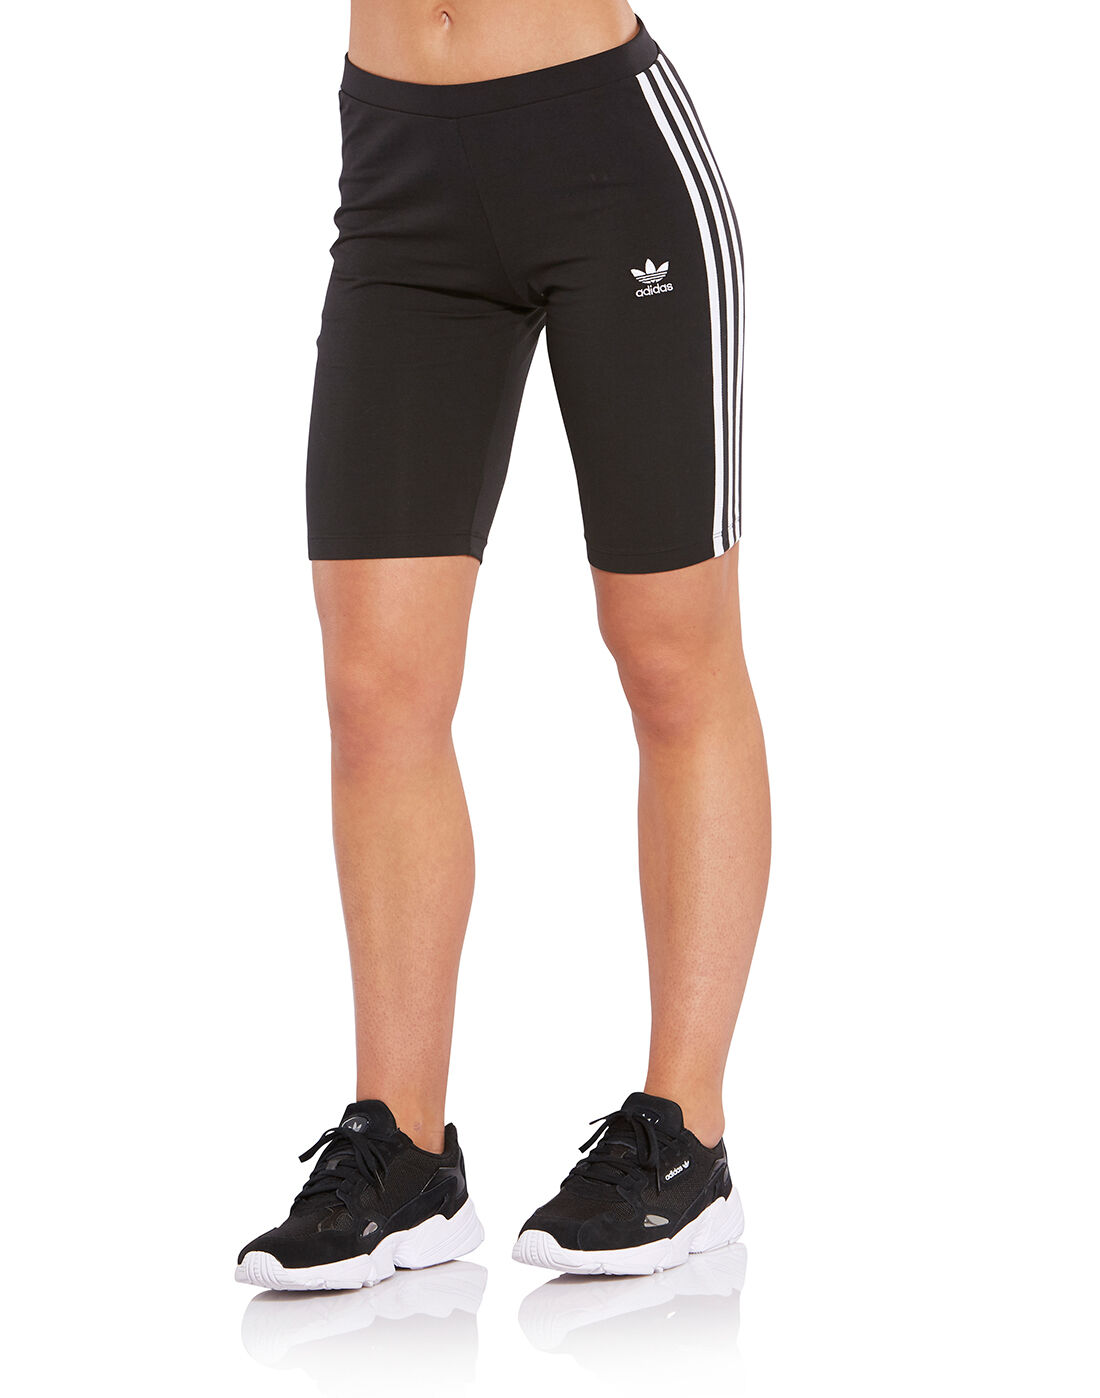 adidas bike shorts womens